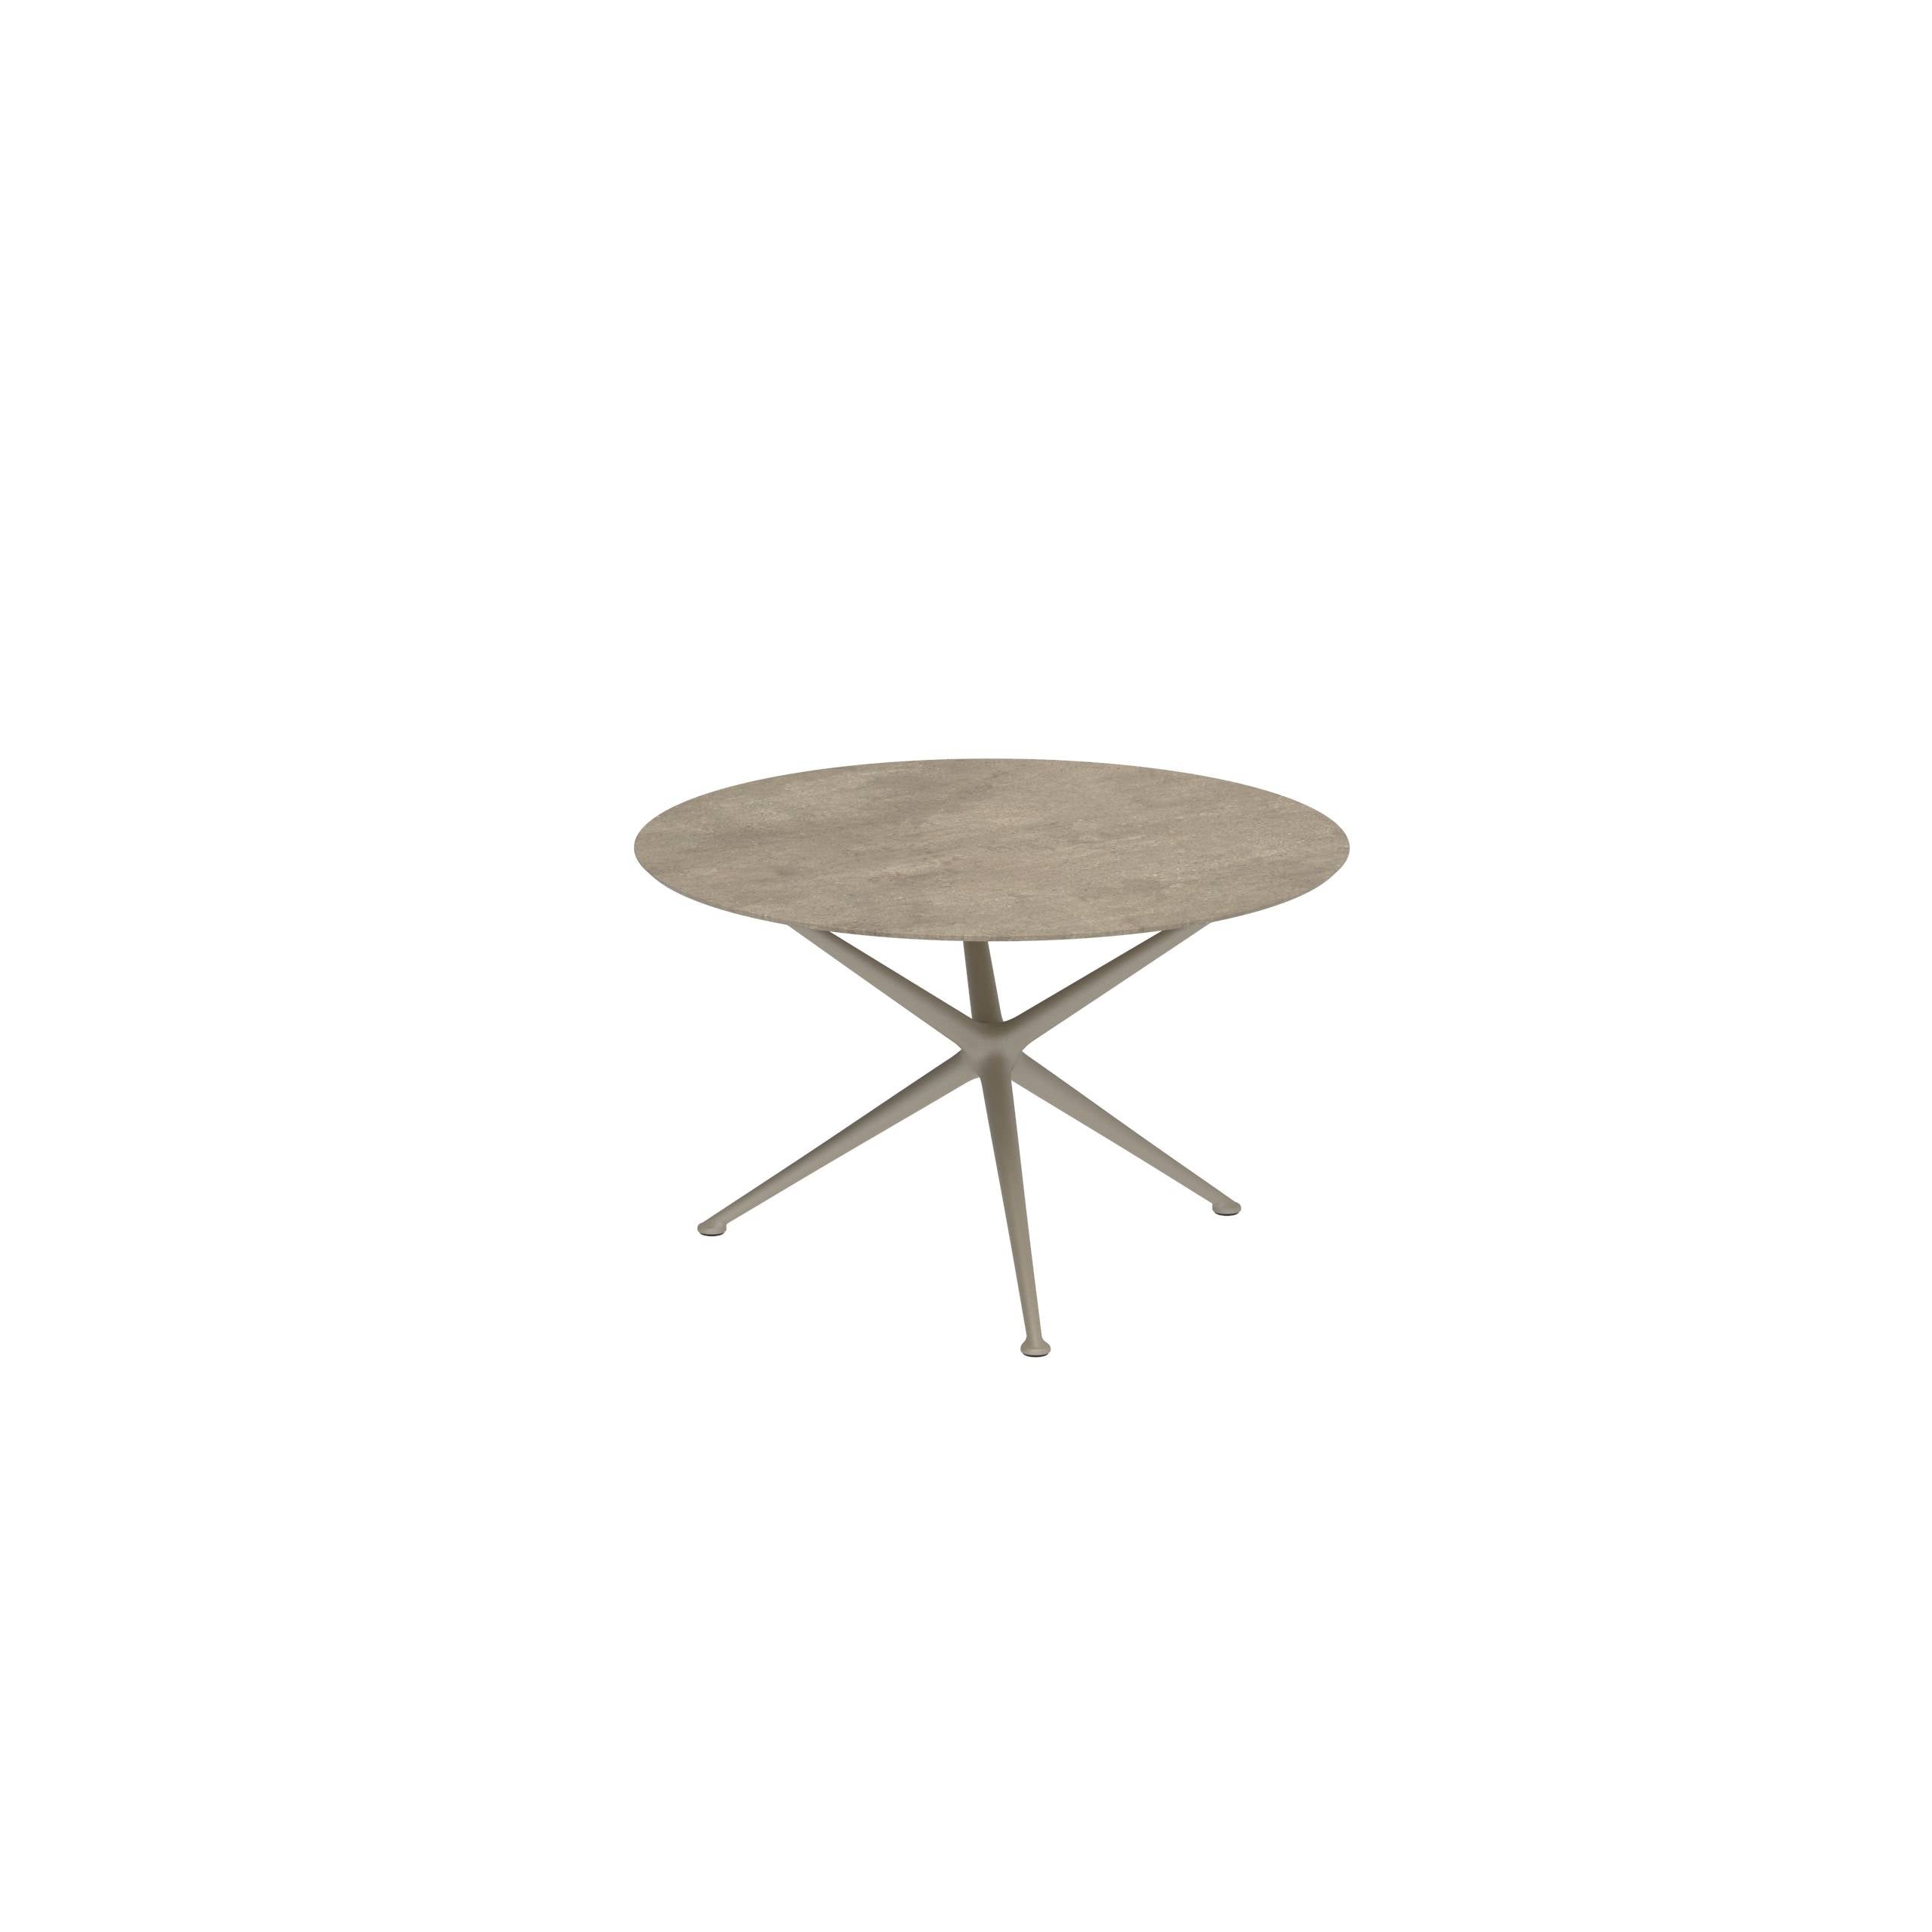 Exes Table Round Ø120 Cm Alu Legs Sand - Ceramic Table Top Terra Sabbia